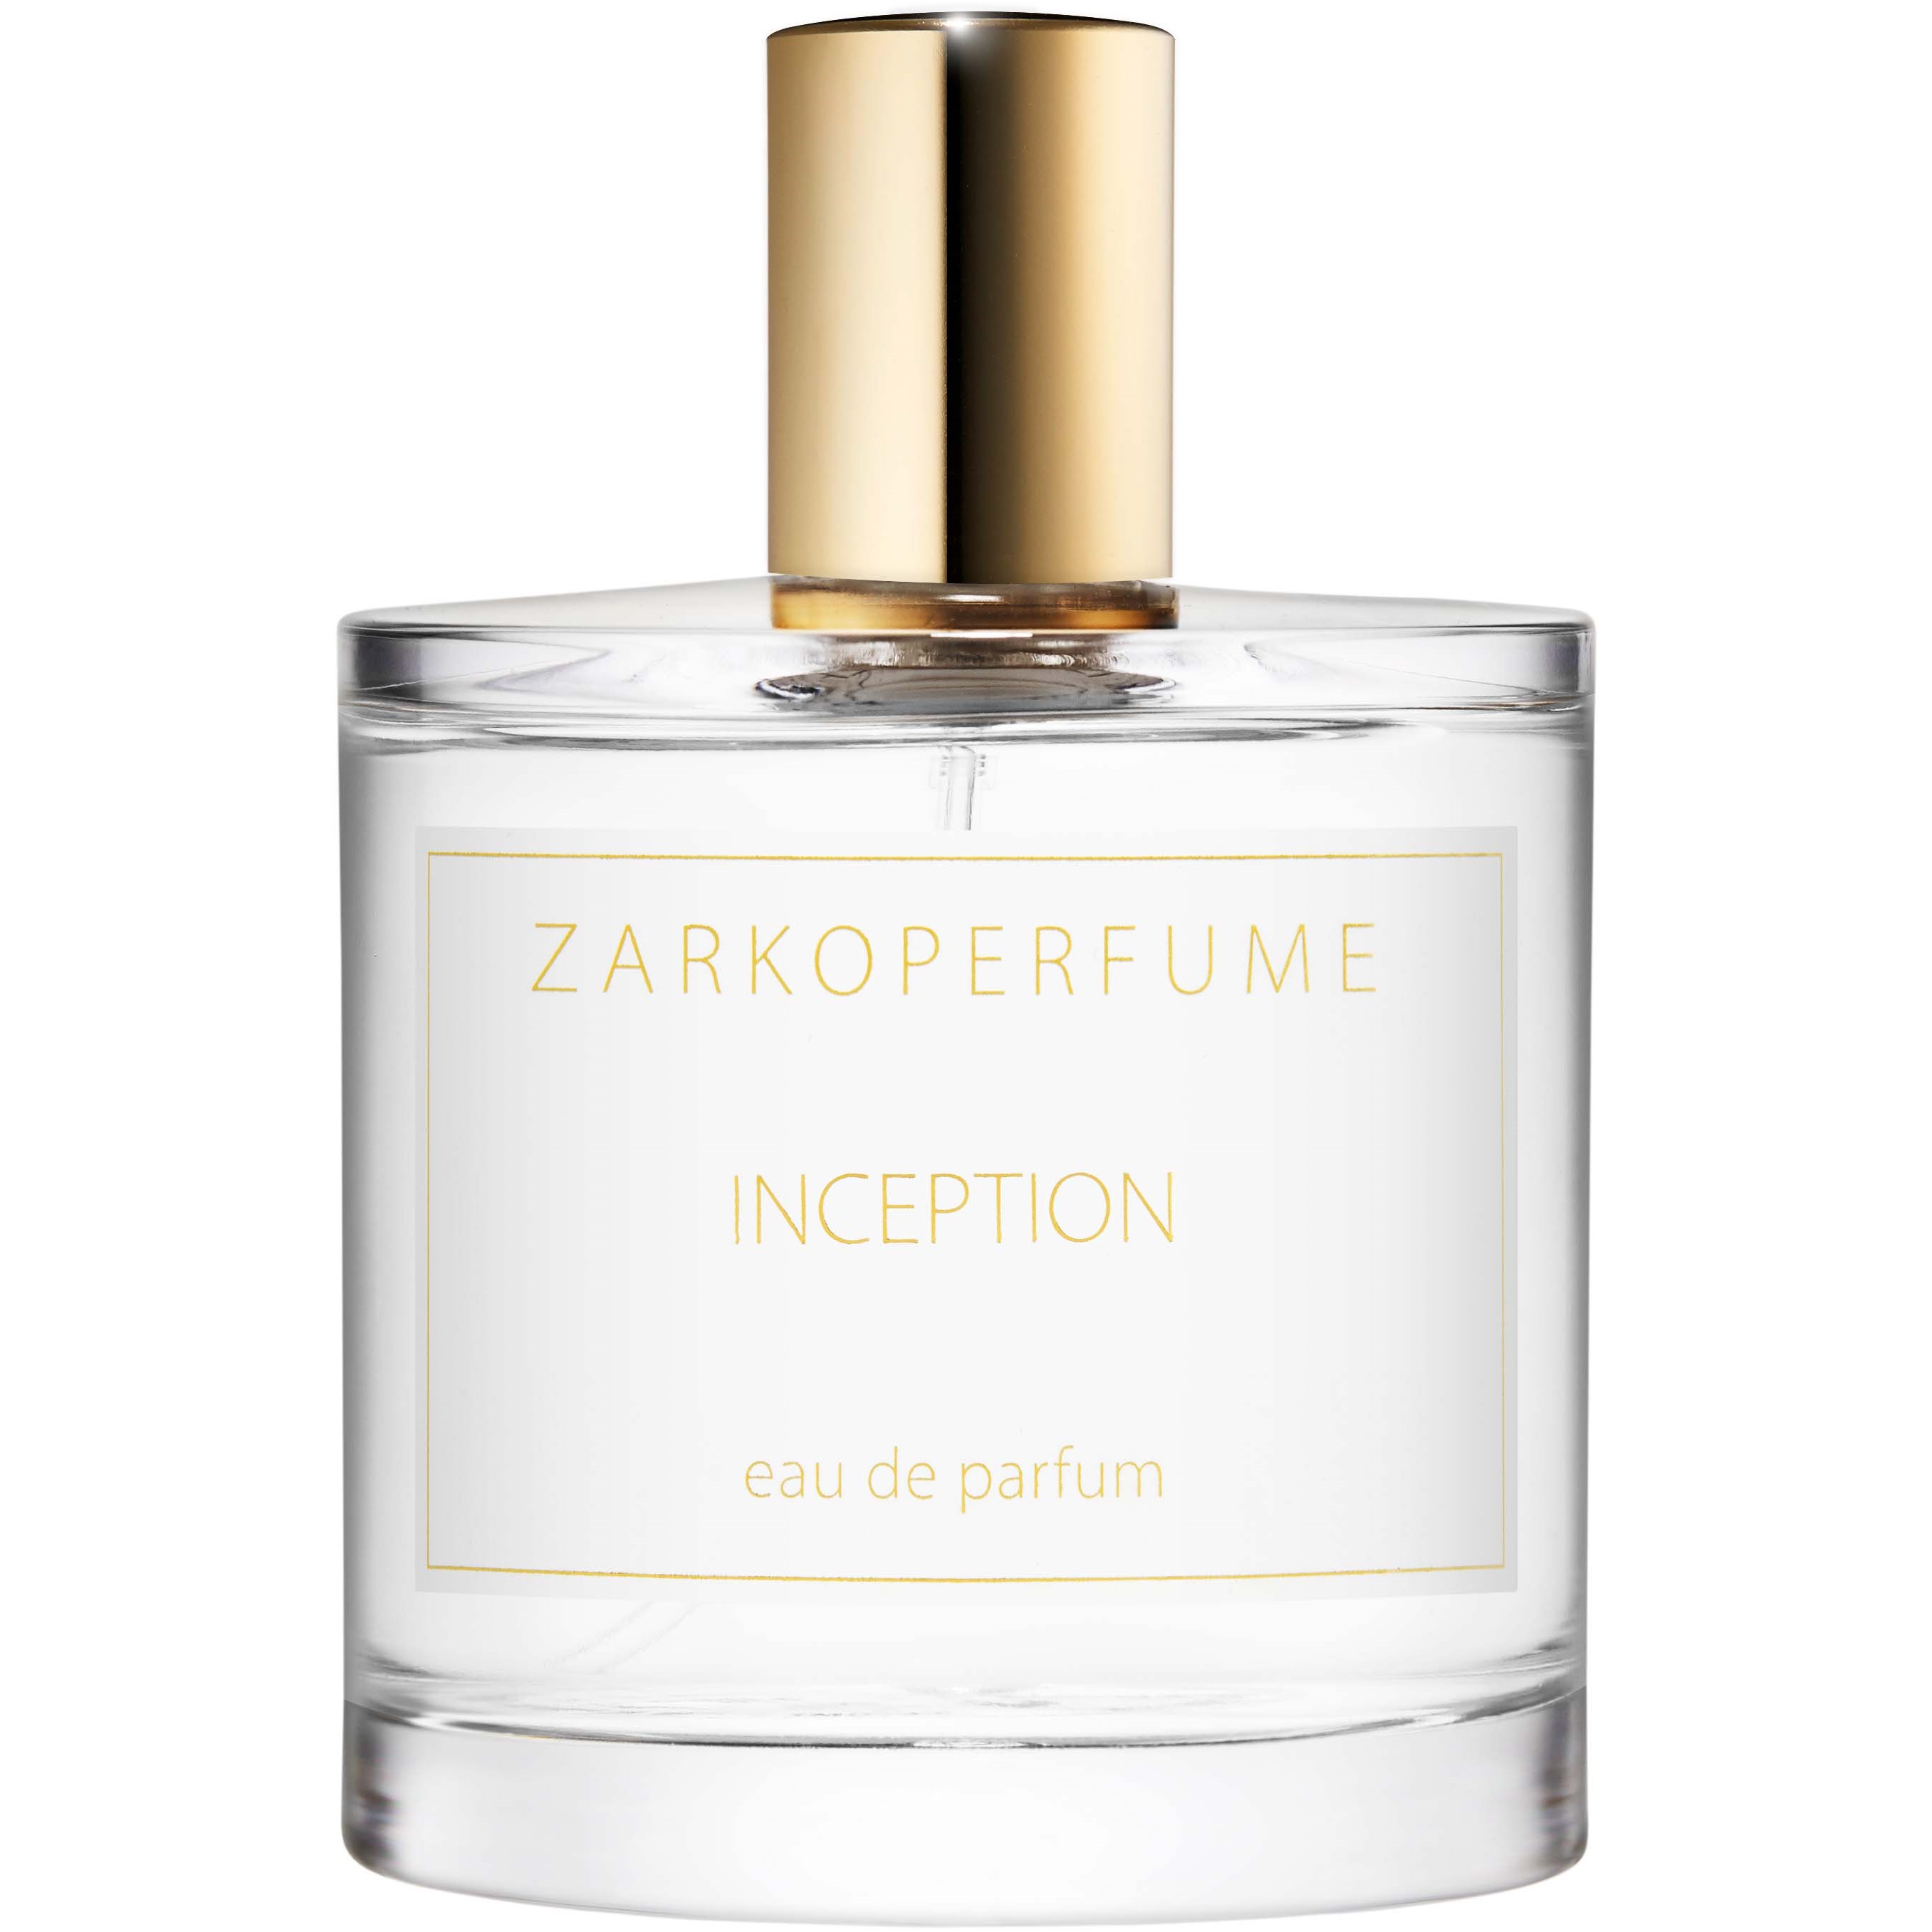 Zarkoperfume Inception EdP, 100ml